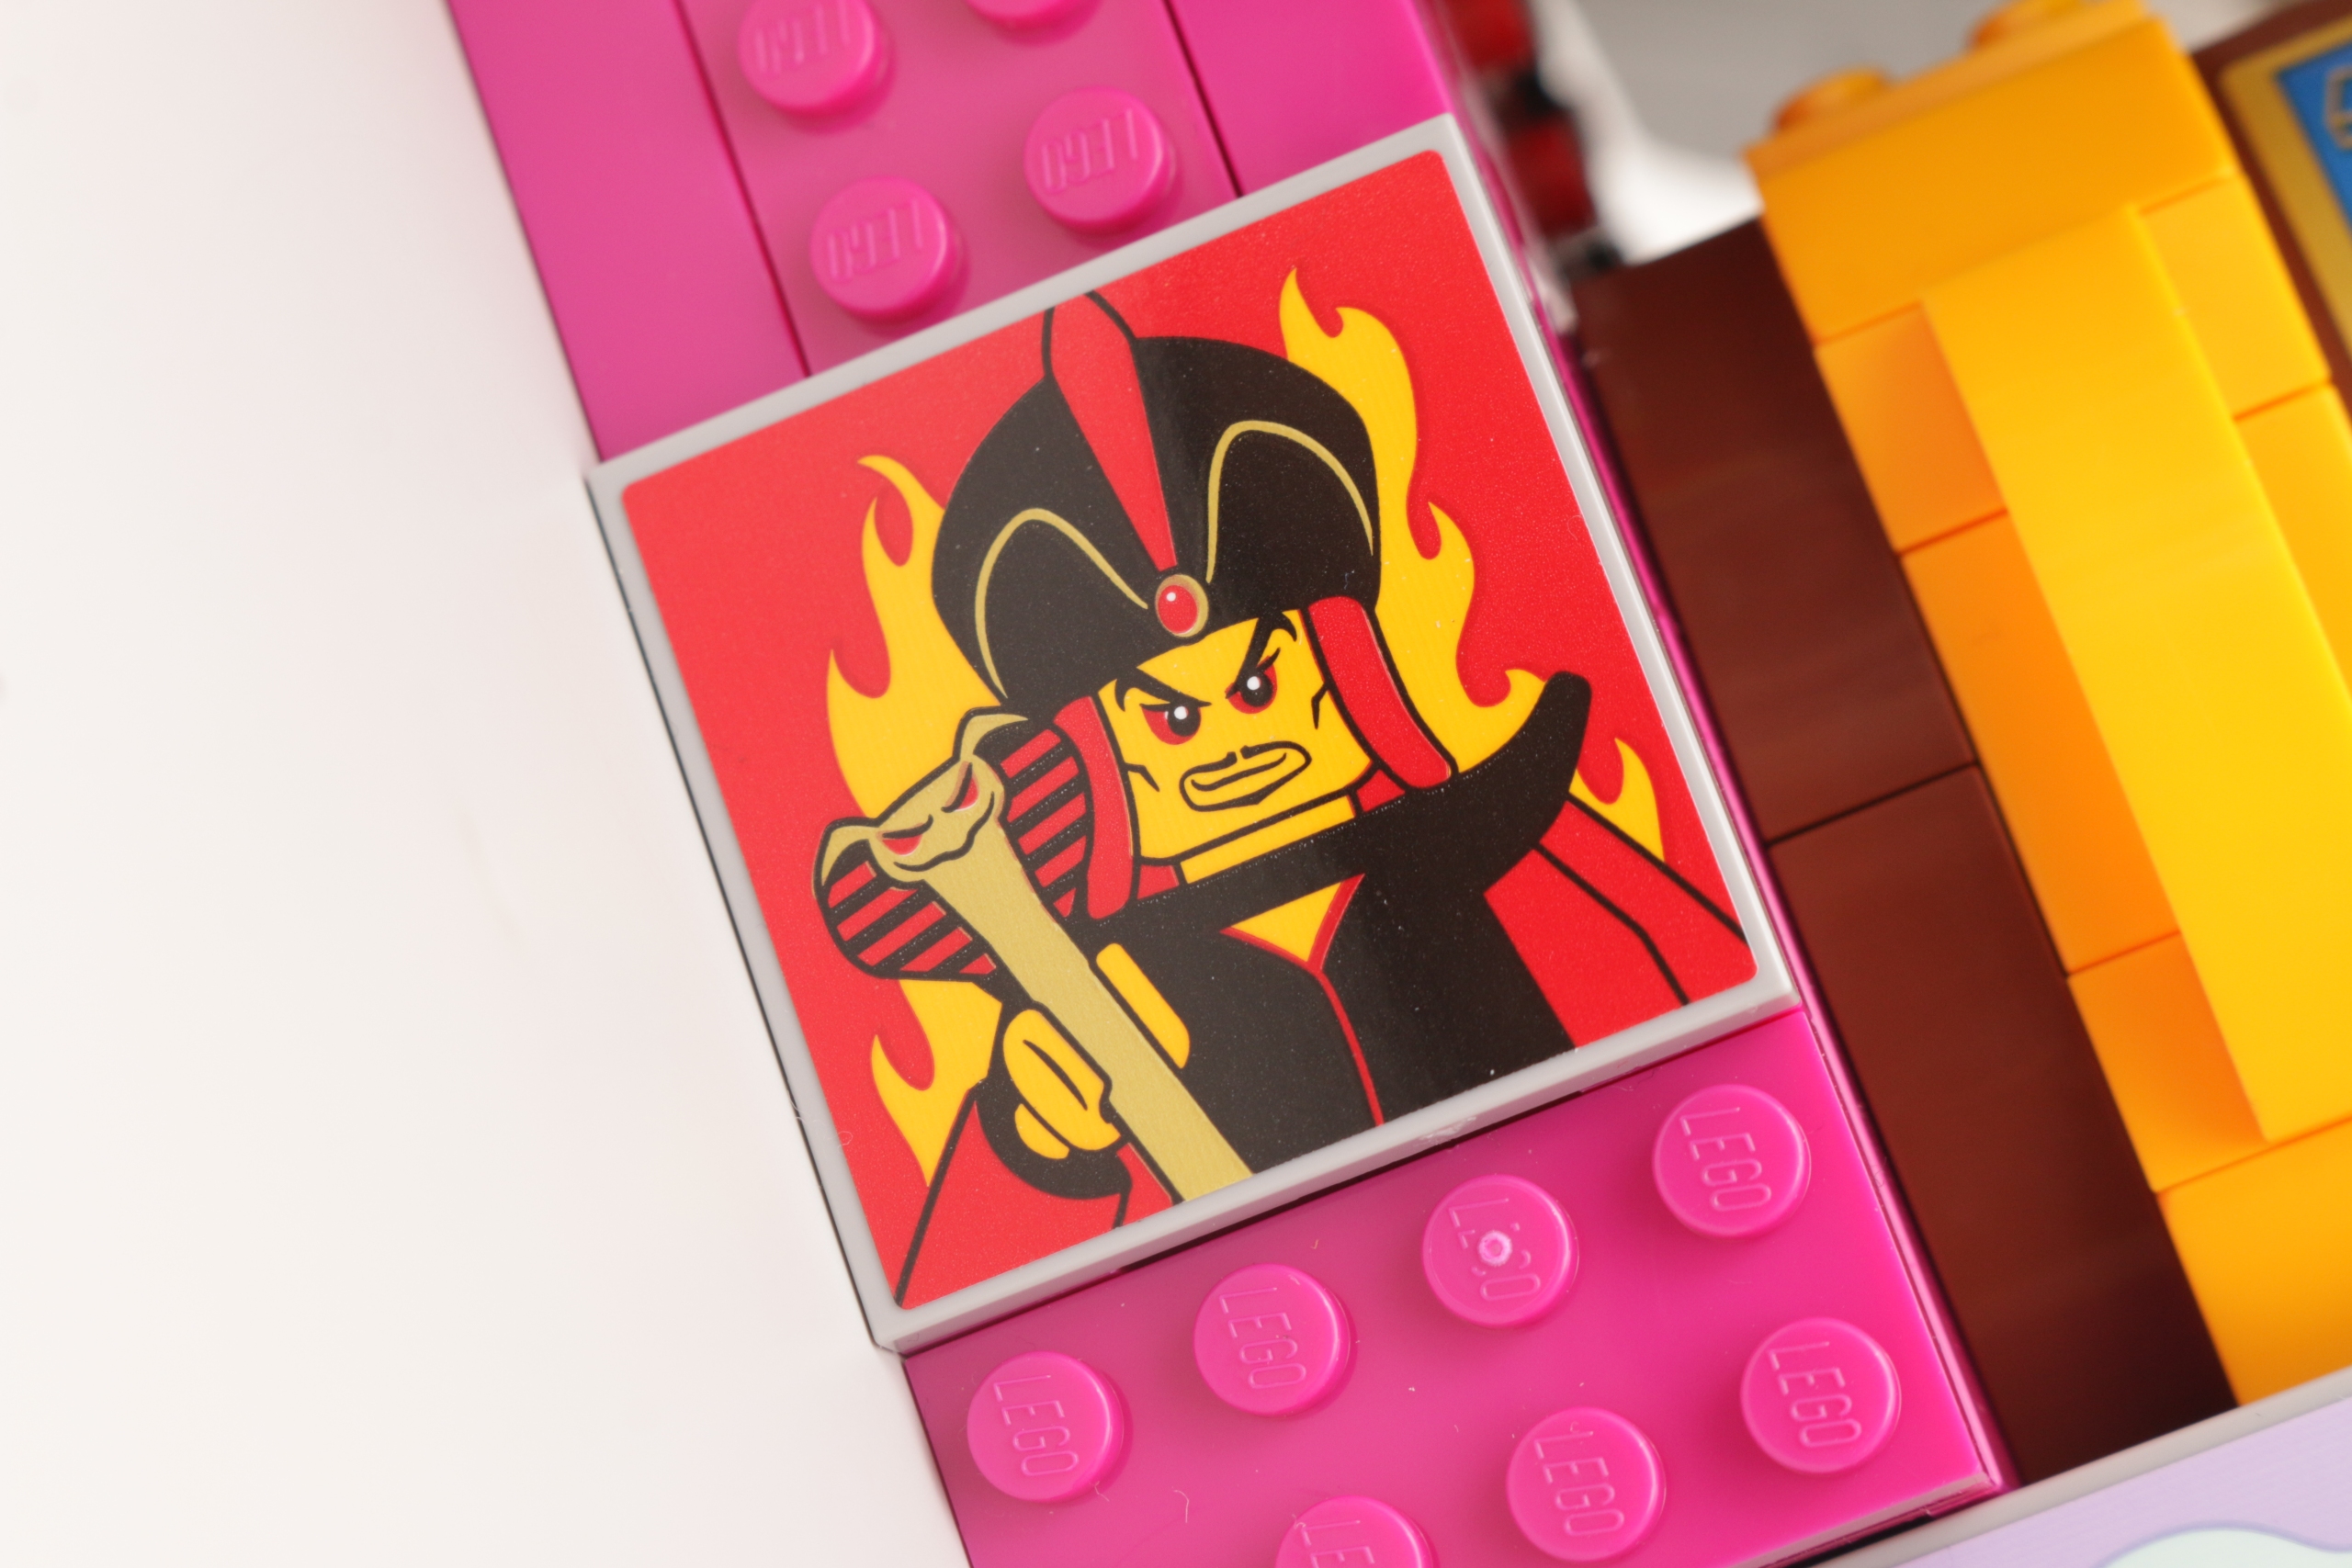 LEGO Disney Villain Icons for Disney 100th Anniversary 43227